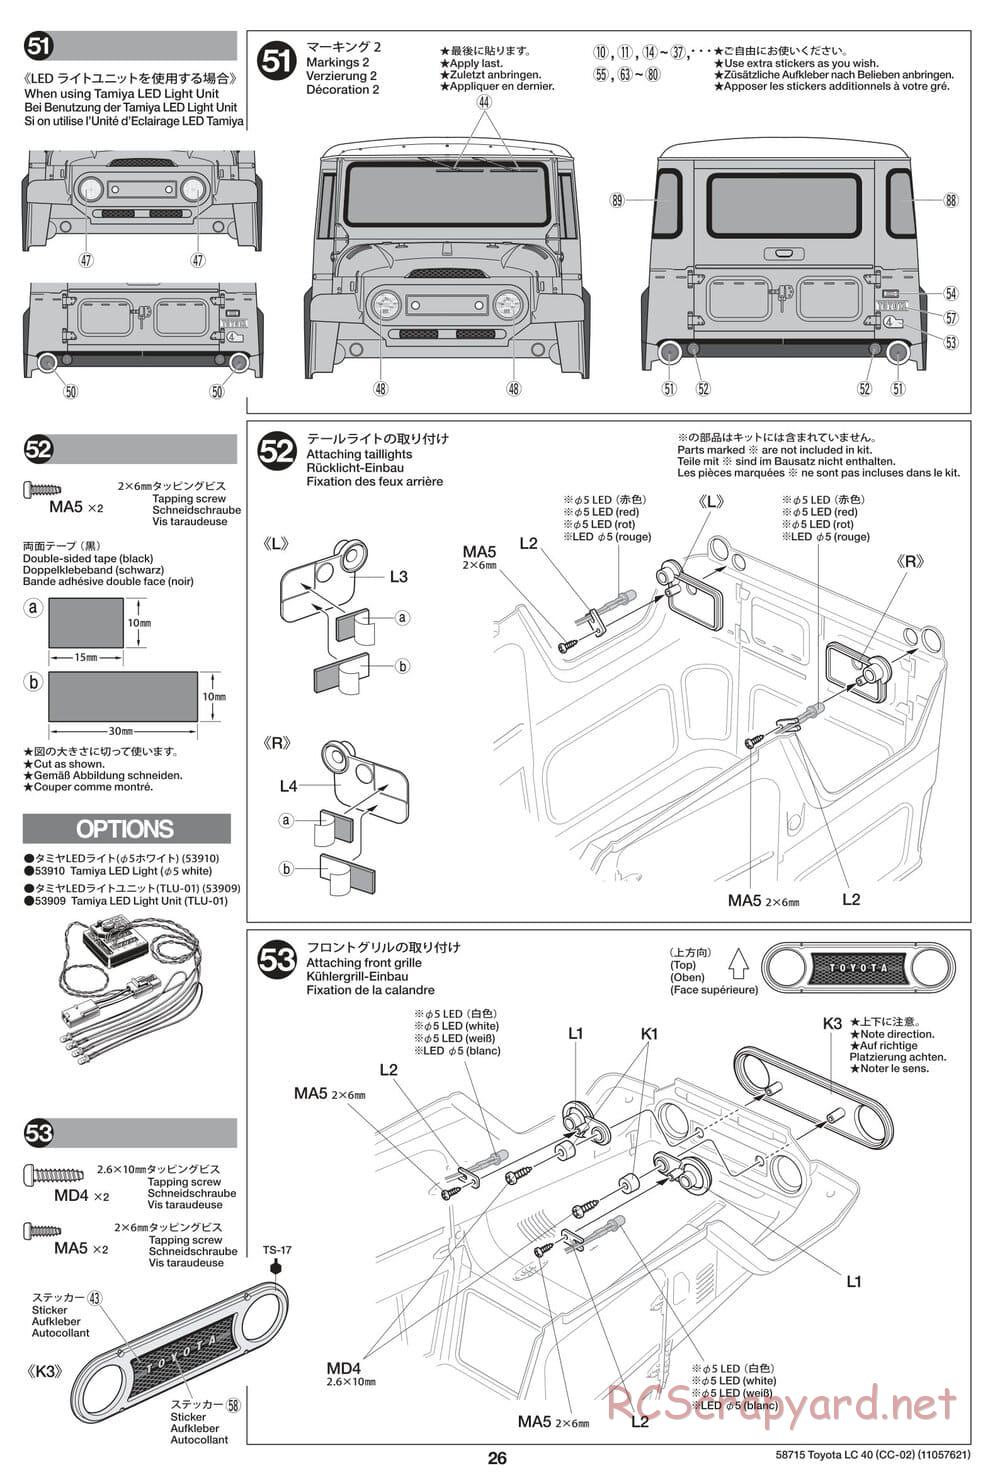 Tamiya - Toyota Land Cruiser 40 - CC-02 Chassis - Manual - Page 26